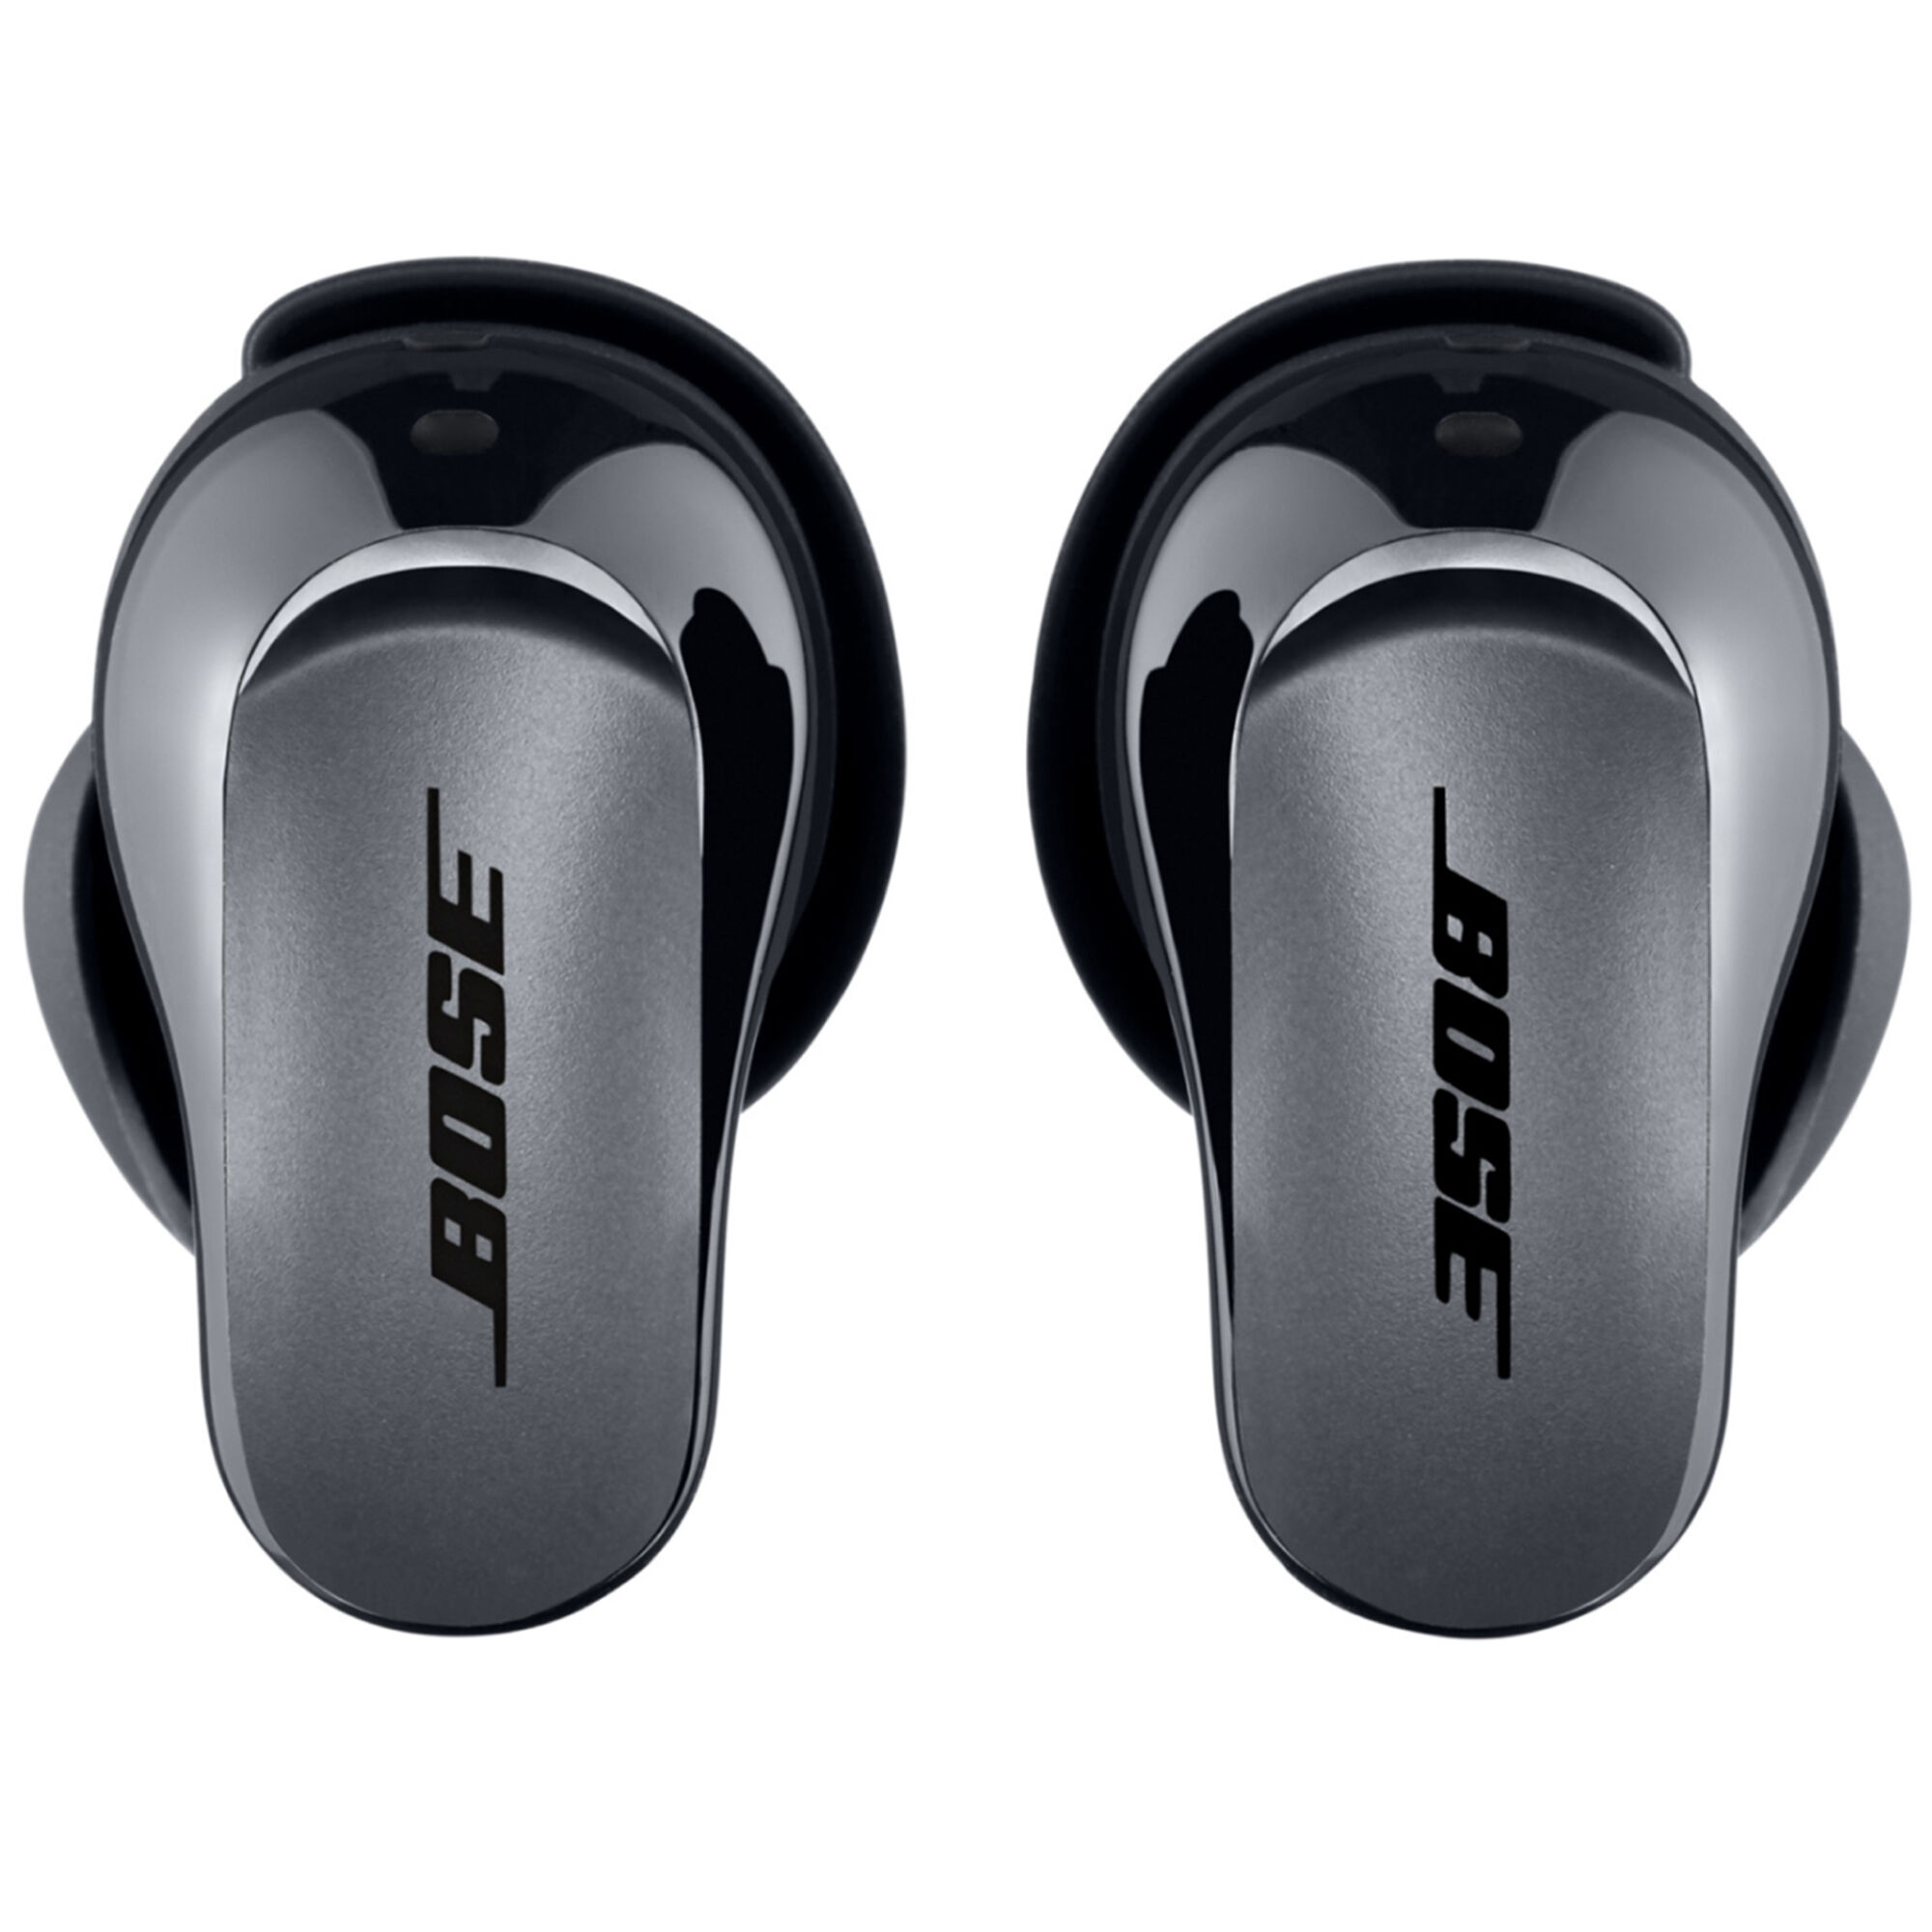 New Bose Quiet Comfort Ultra Earbuds - Black | P.C. Richard & Son